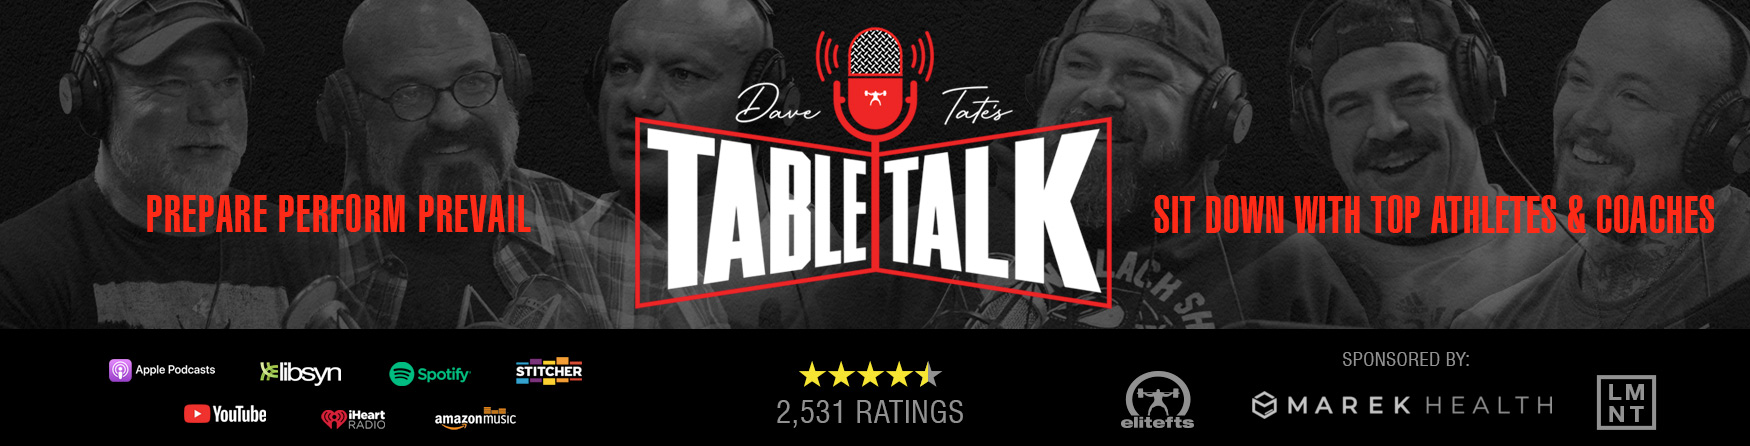 dave tates table talk podcast